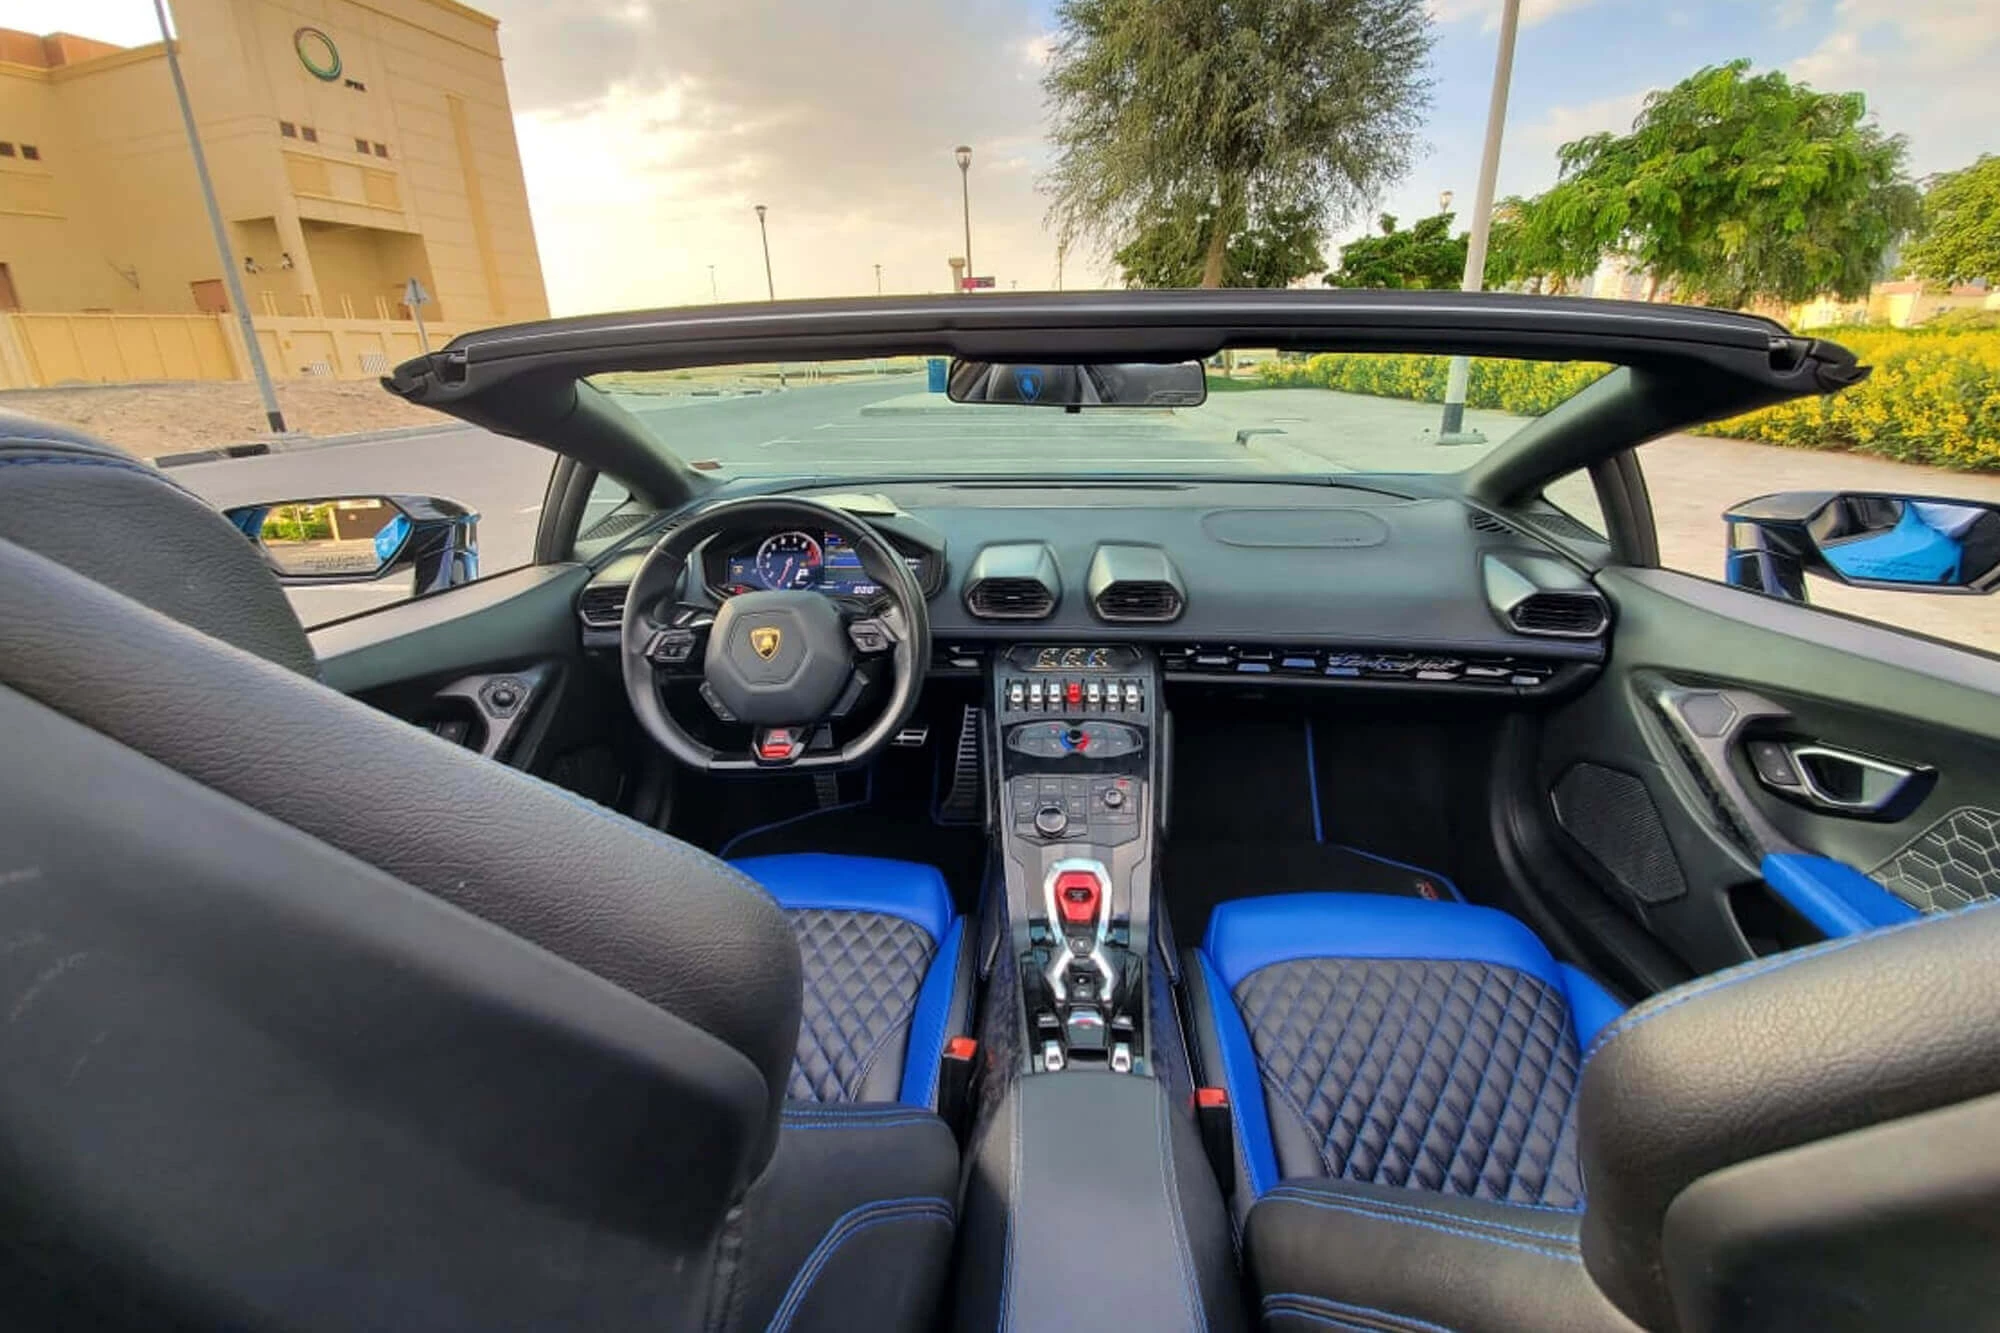 Lamborghini Huracan Spyder (bleu)